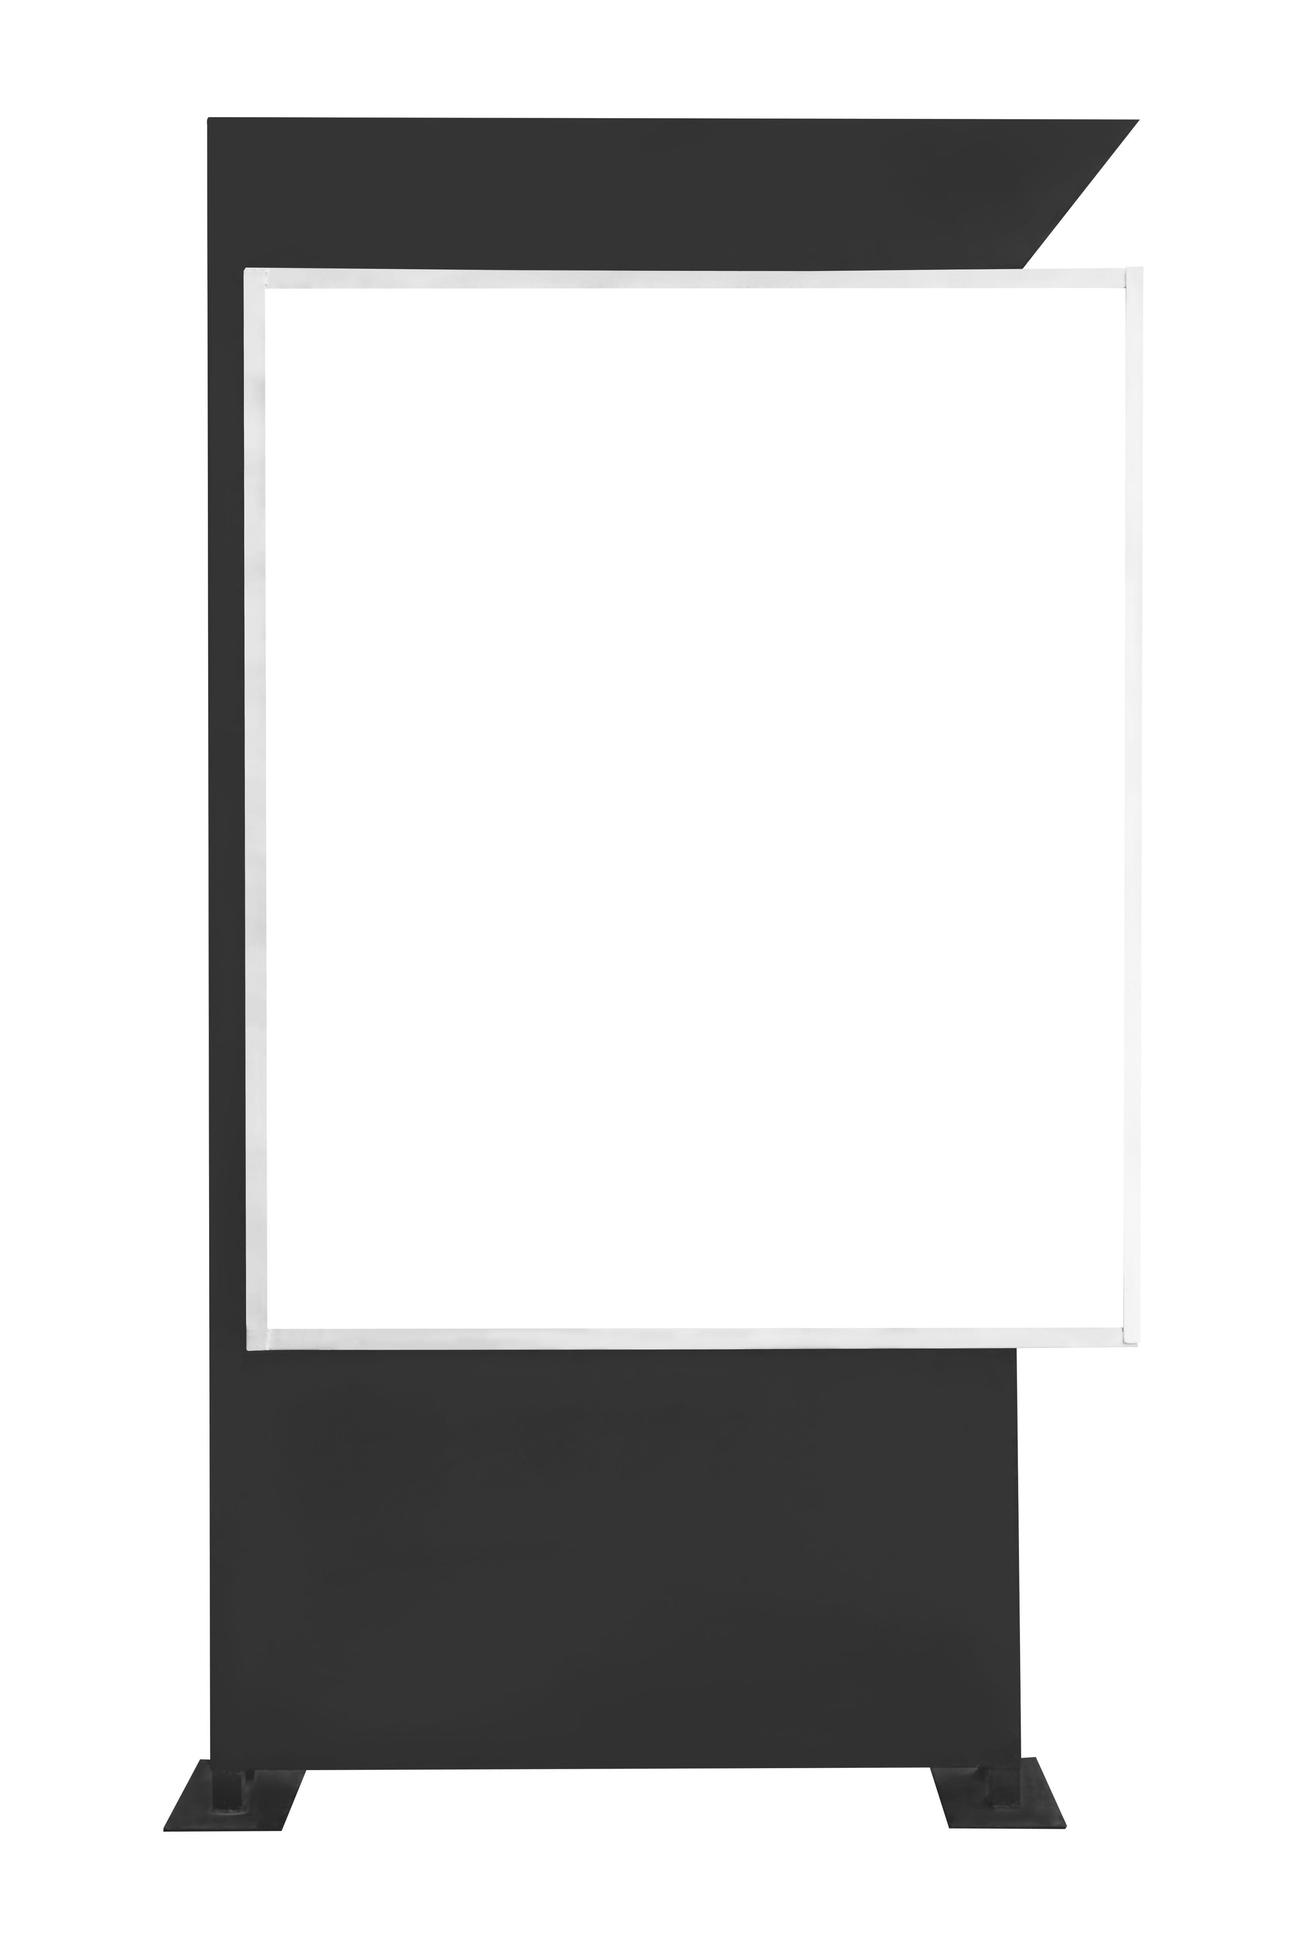 cartelera en blanco negro. foto